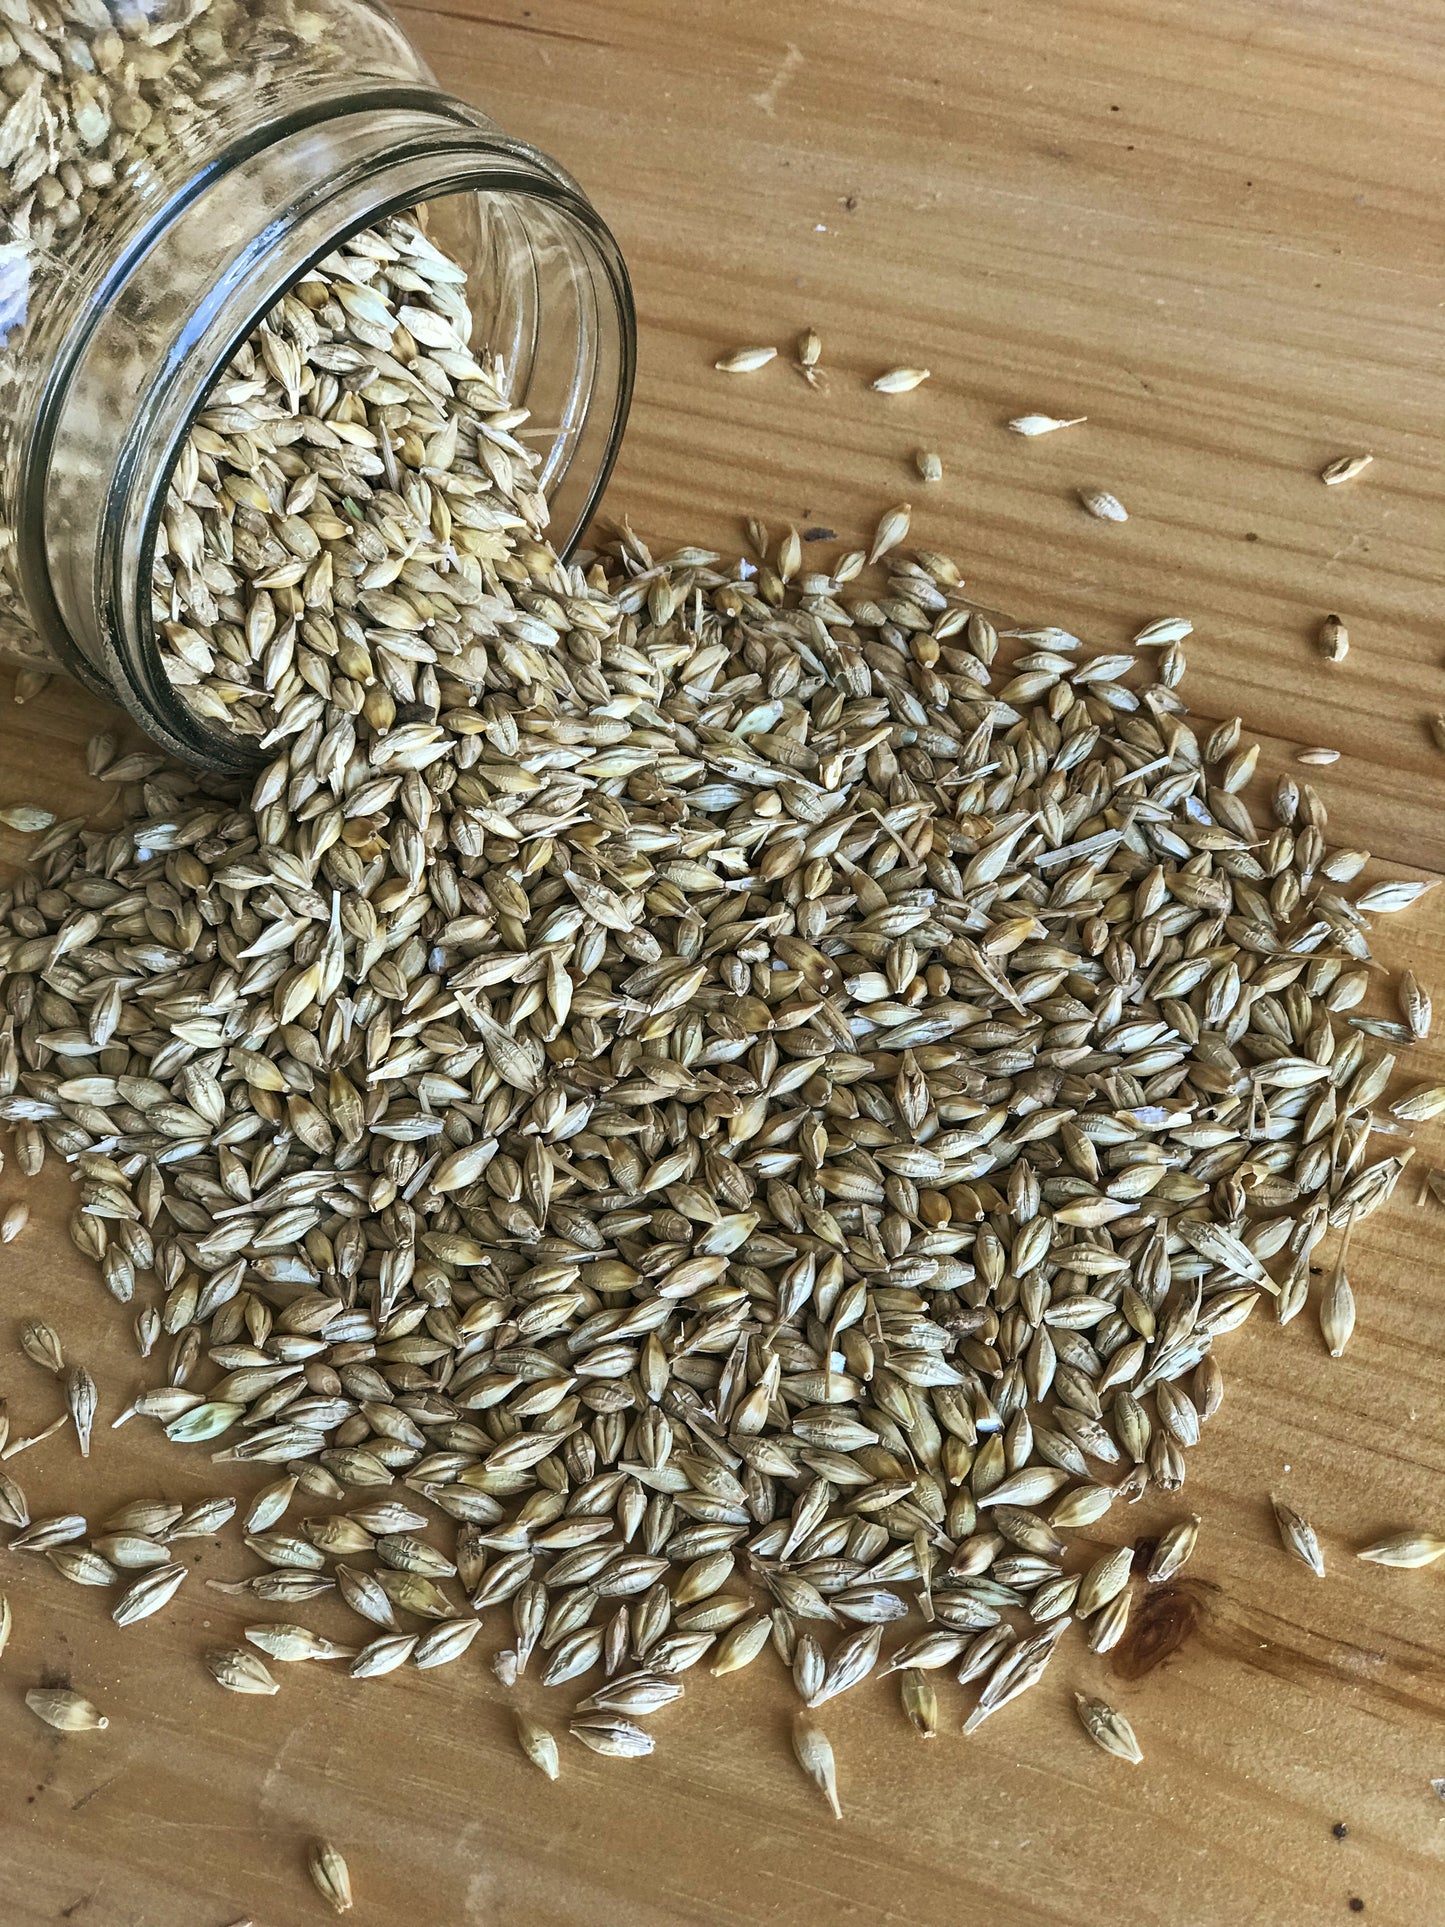 Ernst Grain Barley, Non-GMO